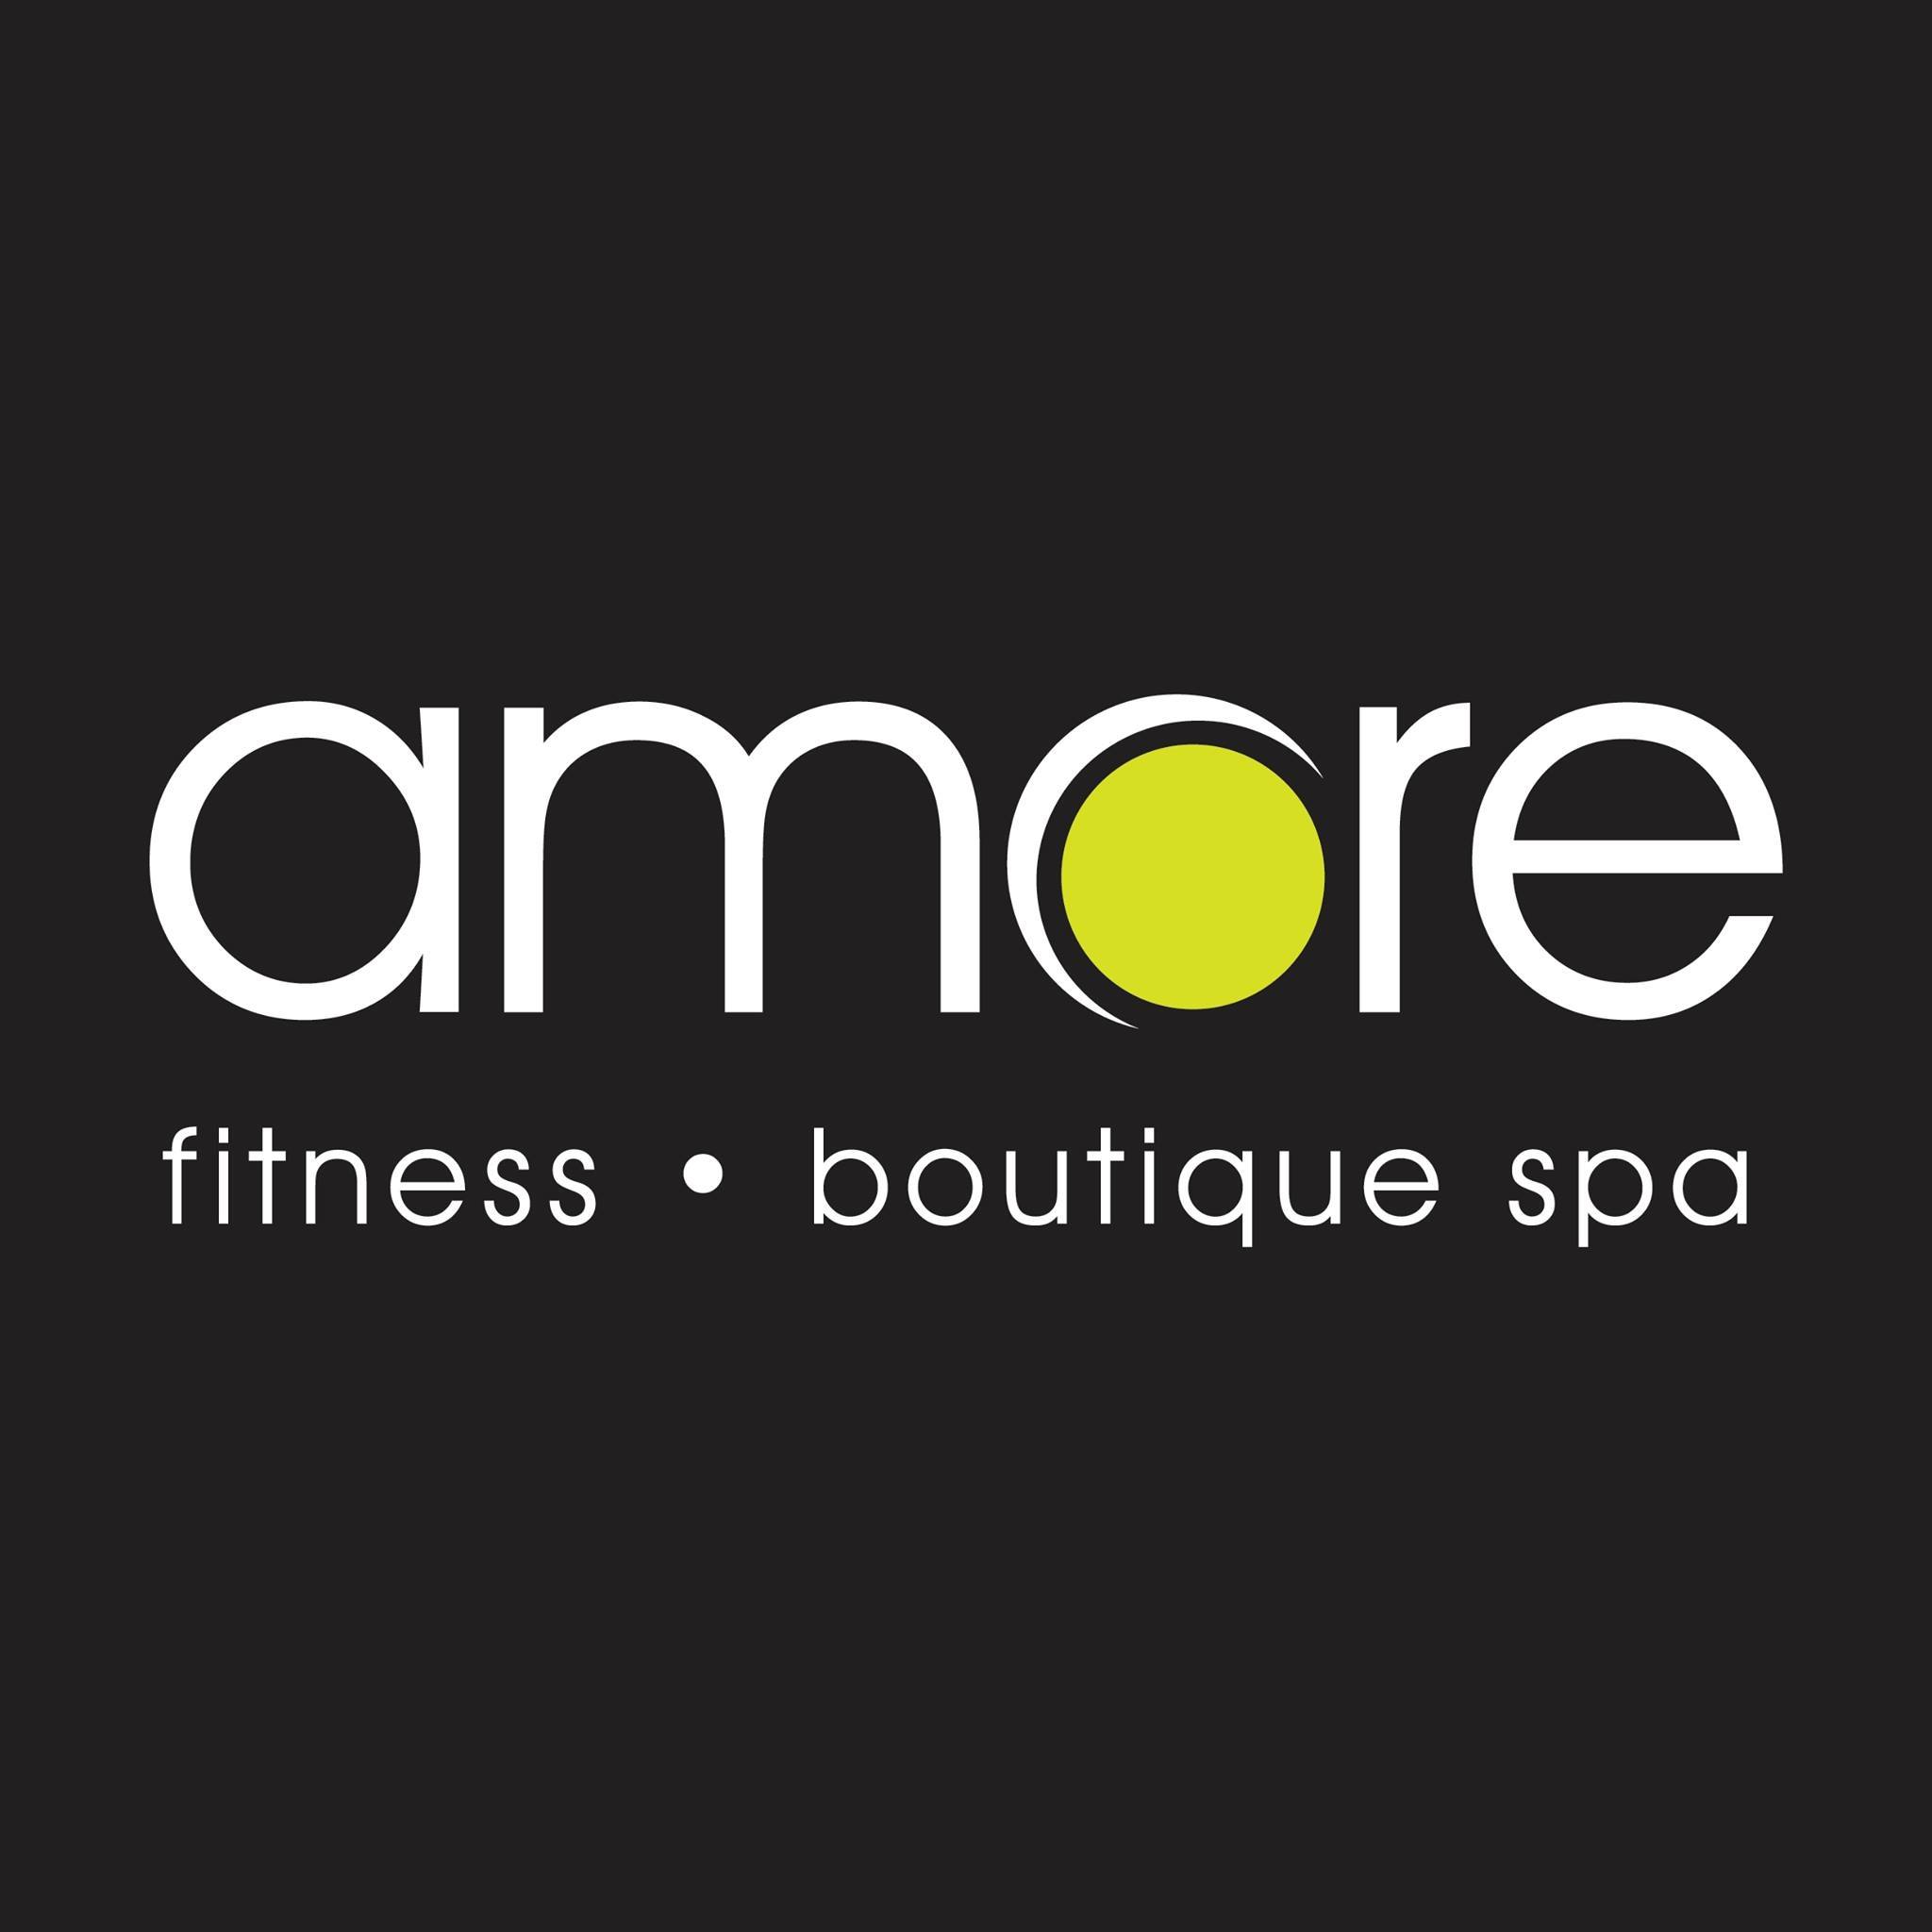 $100 Cash Voucher at Amore Fitness & Boutique Spa - Get Deals, Cashback and Rewards with ShopBack GO